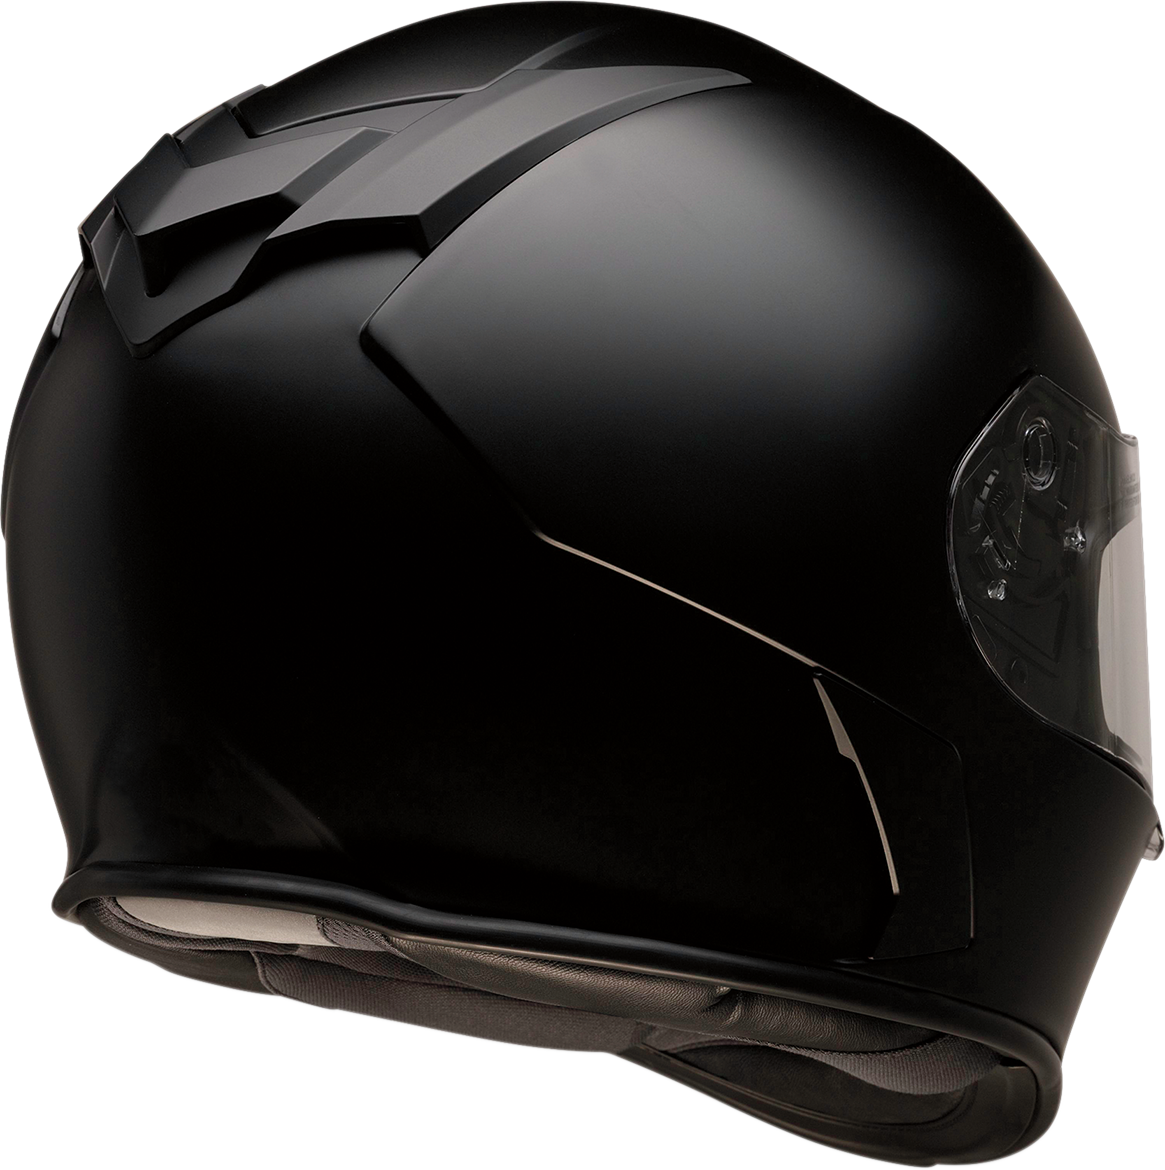 Z1R Warrant Helmet - Flat Black - Medium 0101-13154